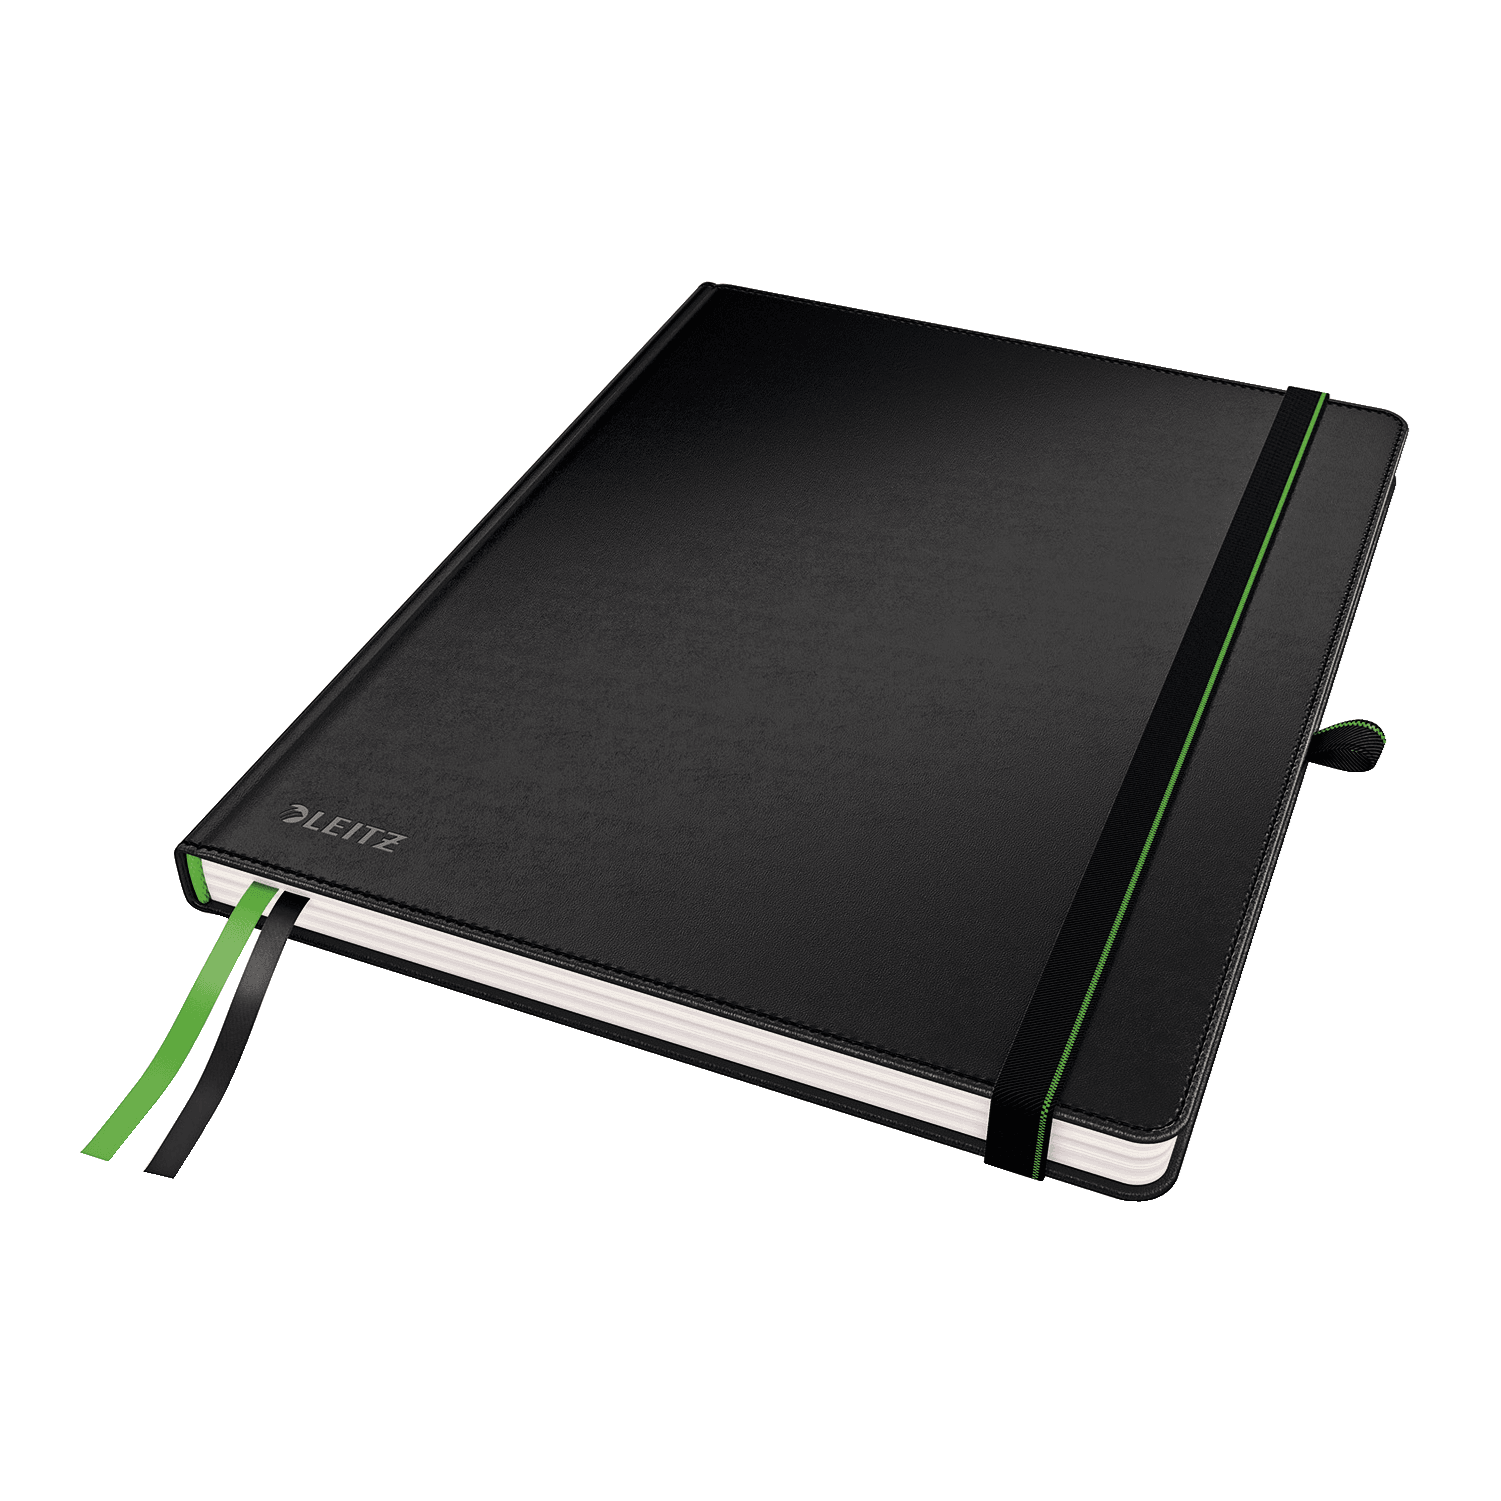 Zápisník Leitz Complete, velikost iPad, čtverečkovaný, černý